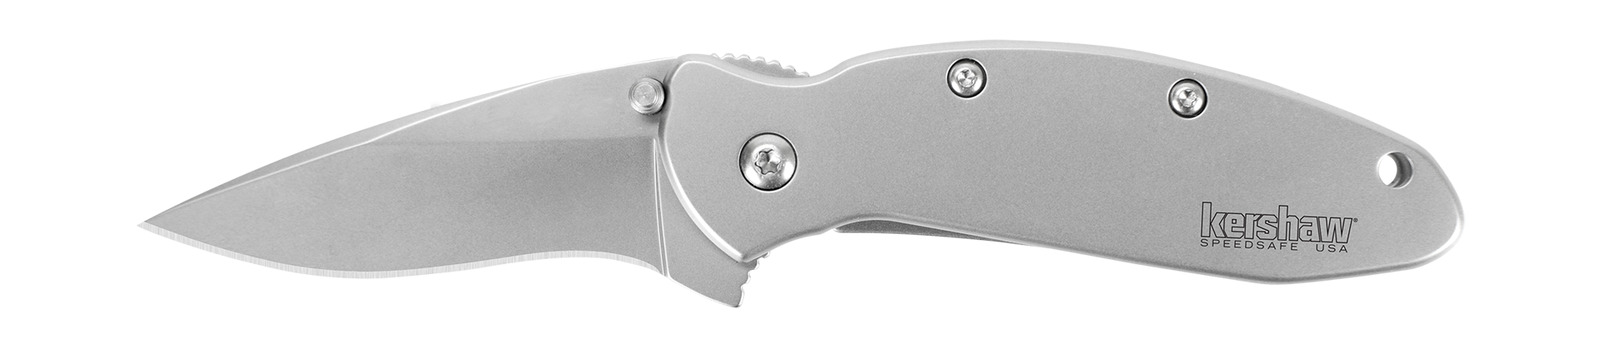 Kershaw Knives Scallion Frame Lock Stainless Steel Handle 420HC Blade 1620FL